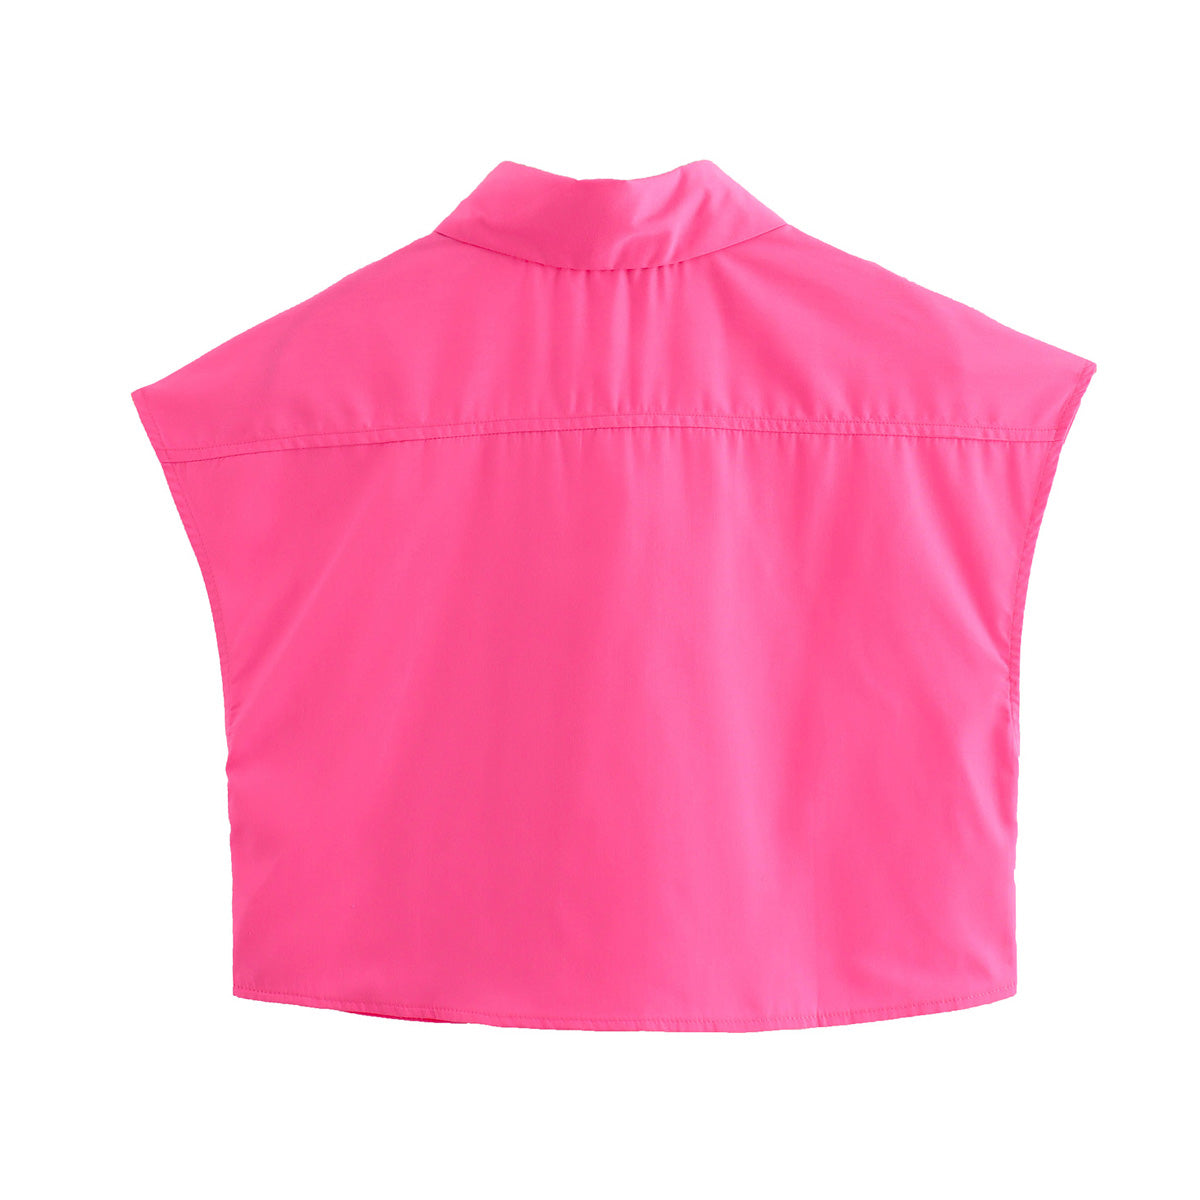 Summer Korean Loose Fitting Simplicity Collared Single Breasted Drawstring at Hem Design Sleeveless Top Shirt for Women